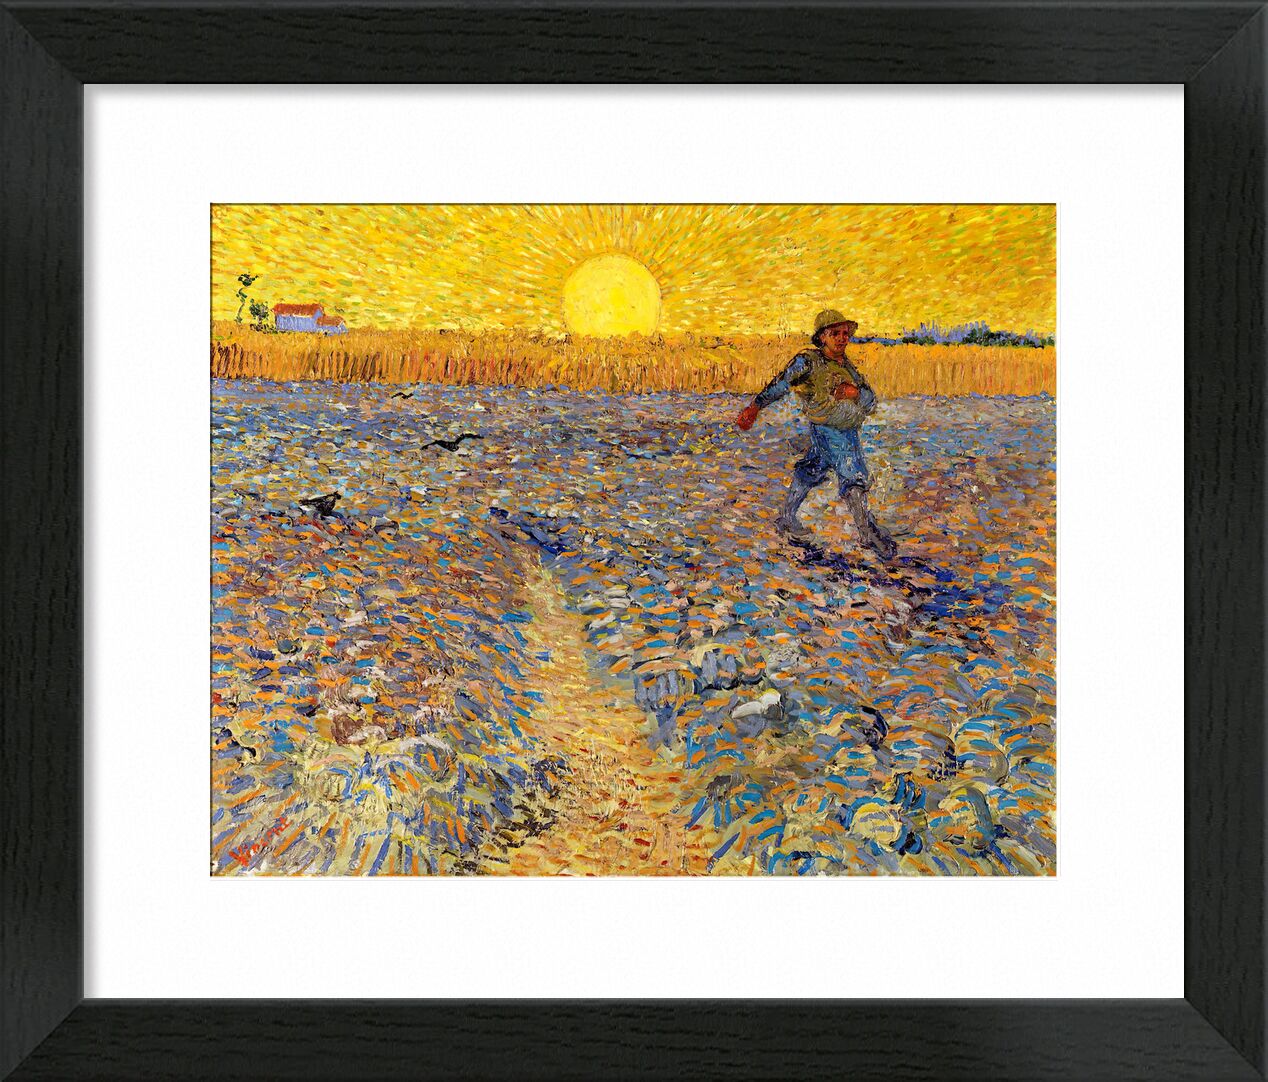 Sower at Sunset - VINCENT VAN GOGH 1888 desde Bellas artes, Prodi Art, paisaje, campos de trigo, sol, pintura, campos, VINCENT VAN GOGH, campesino, agricultor, sembrar